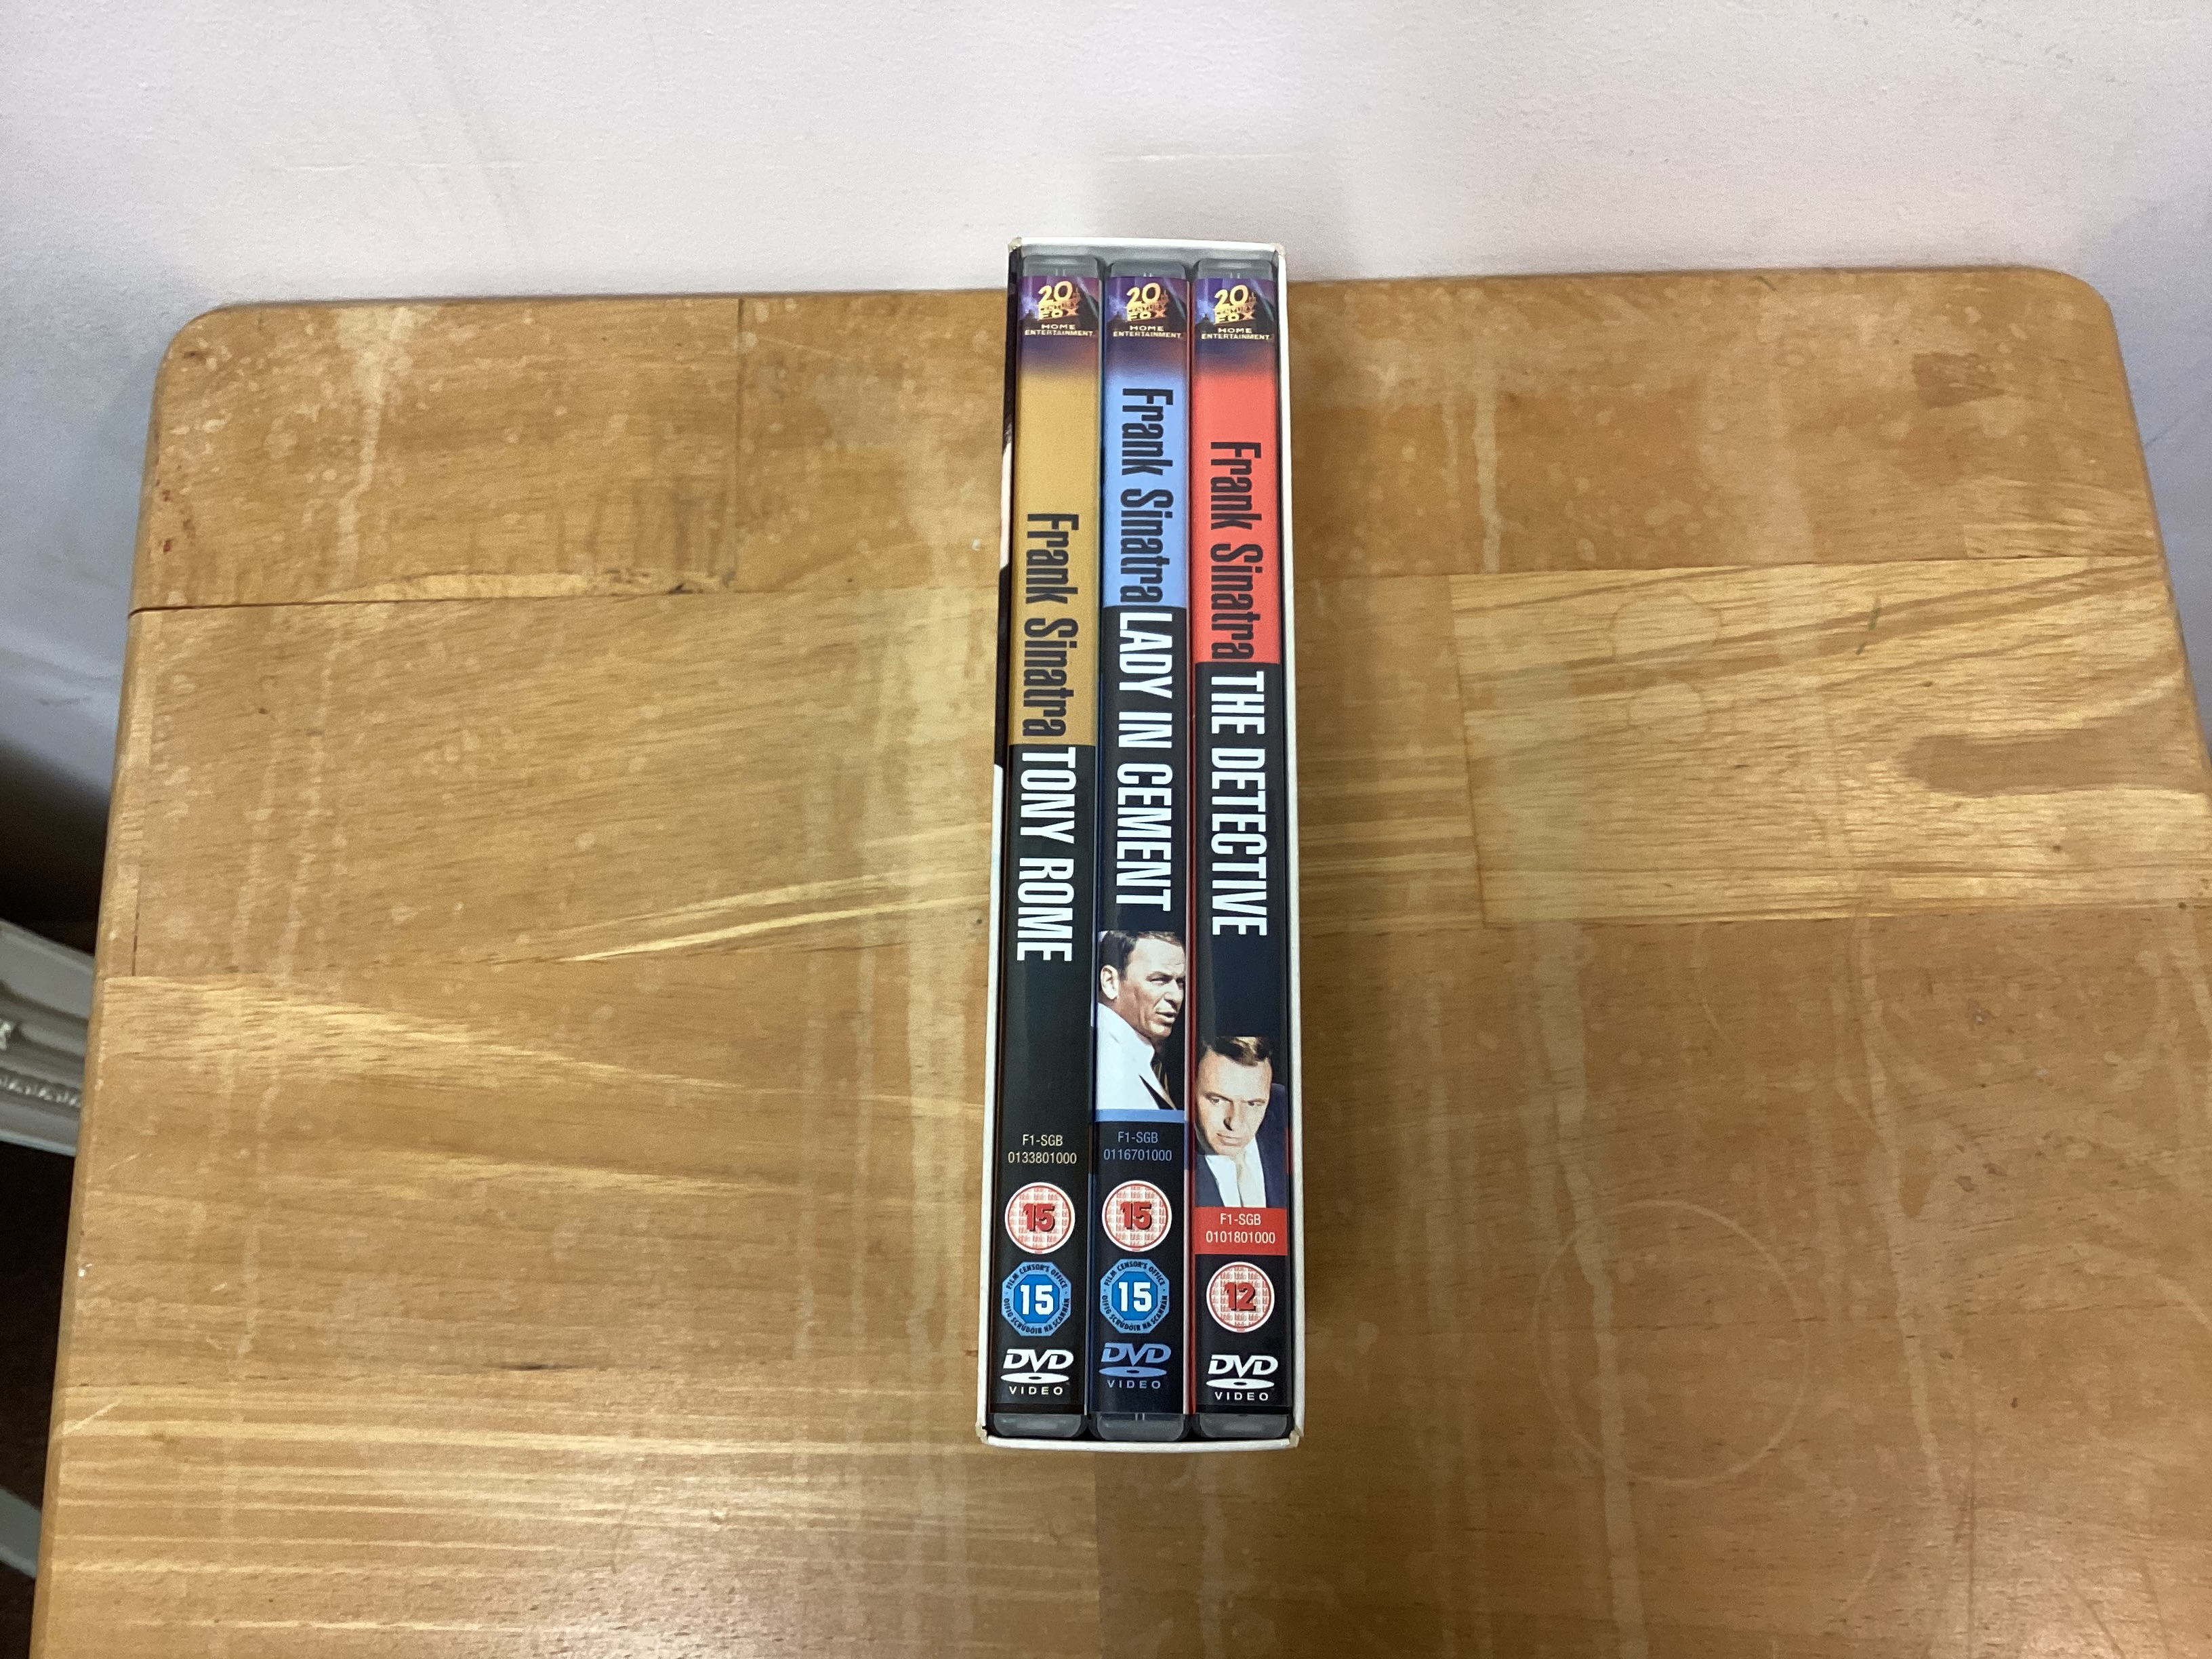 Frank Sinatra DVD Triple Pack